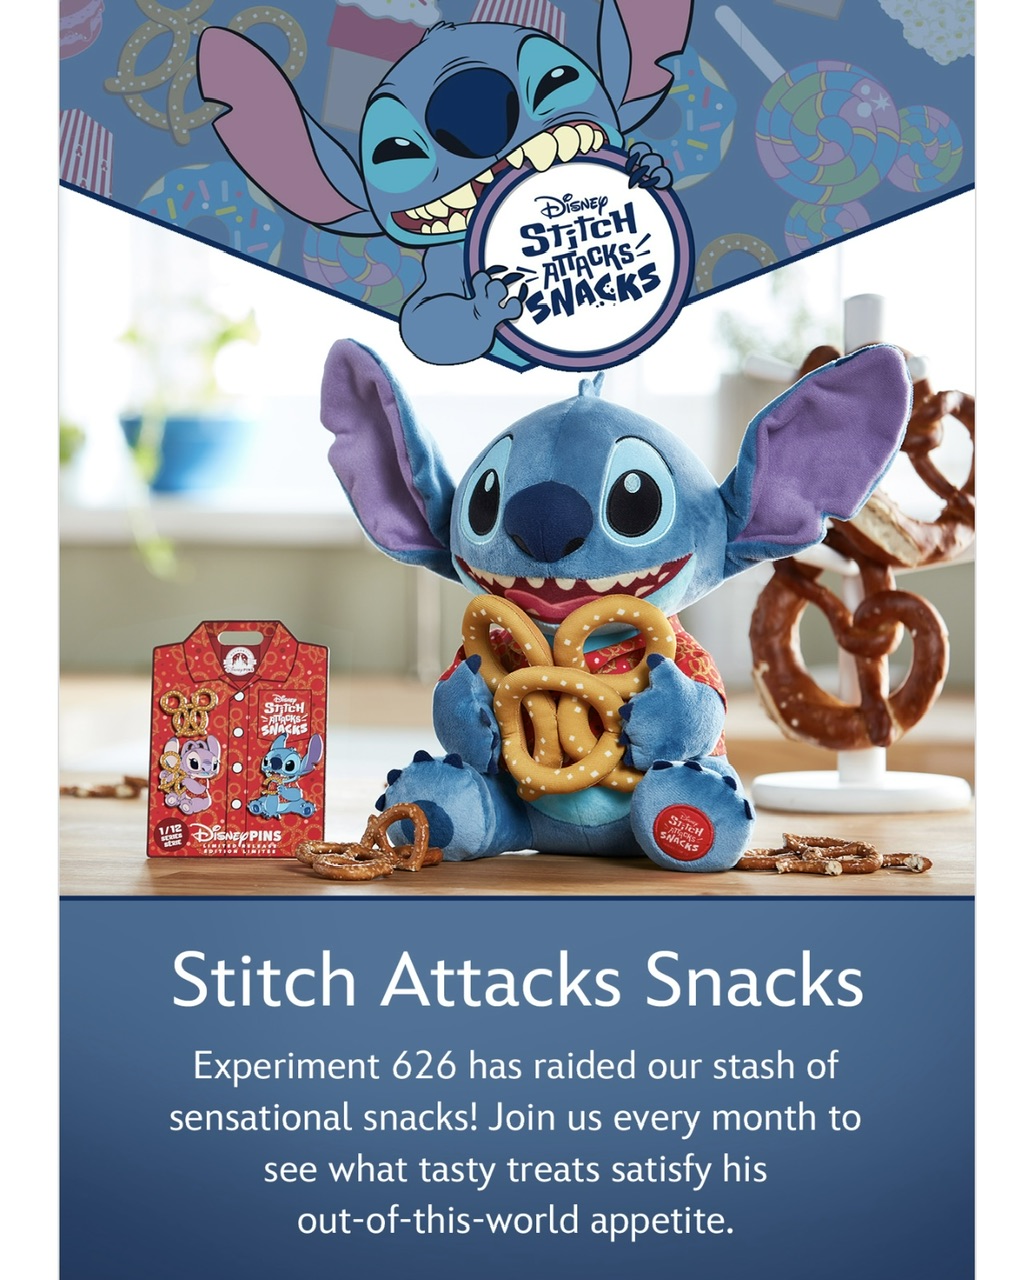 Disney Pins Blog - New Stitch pins recently released at Disneyland